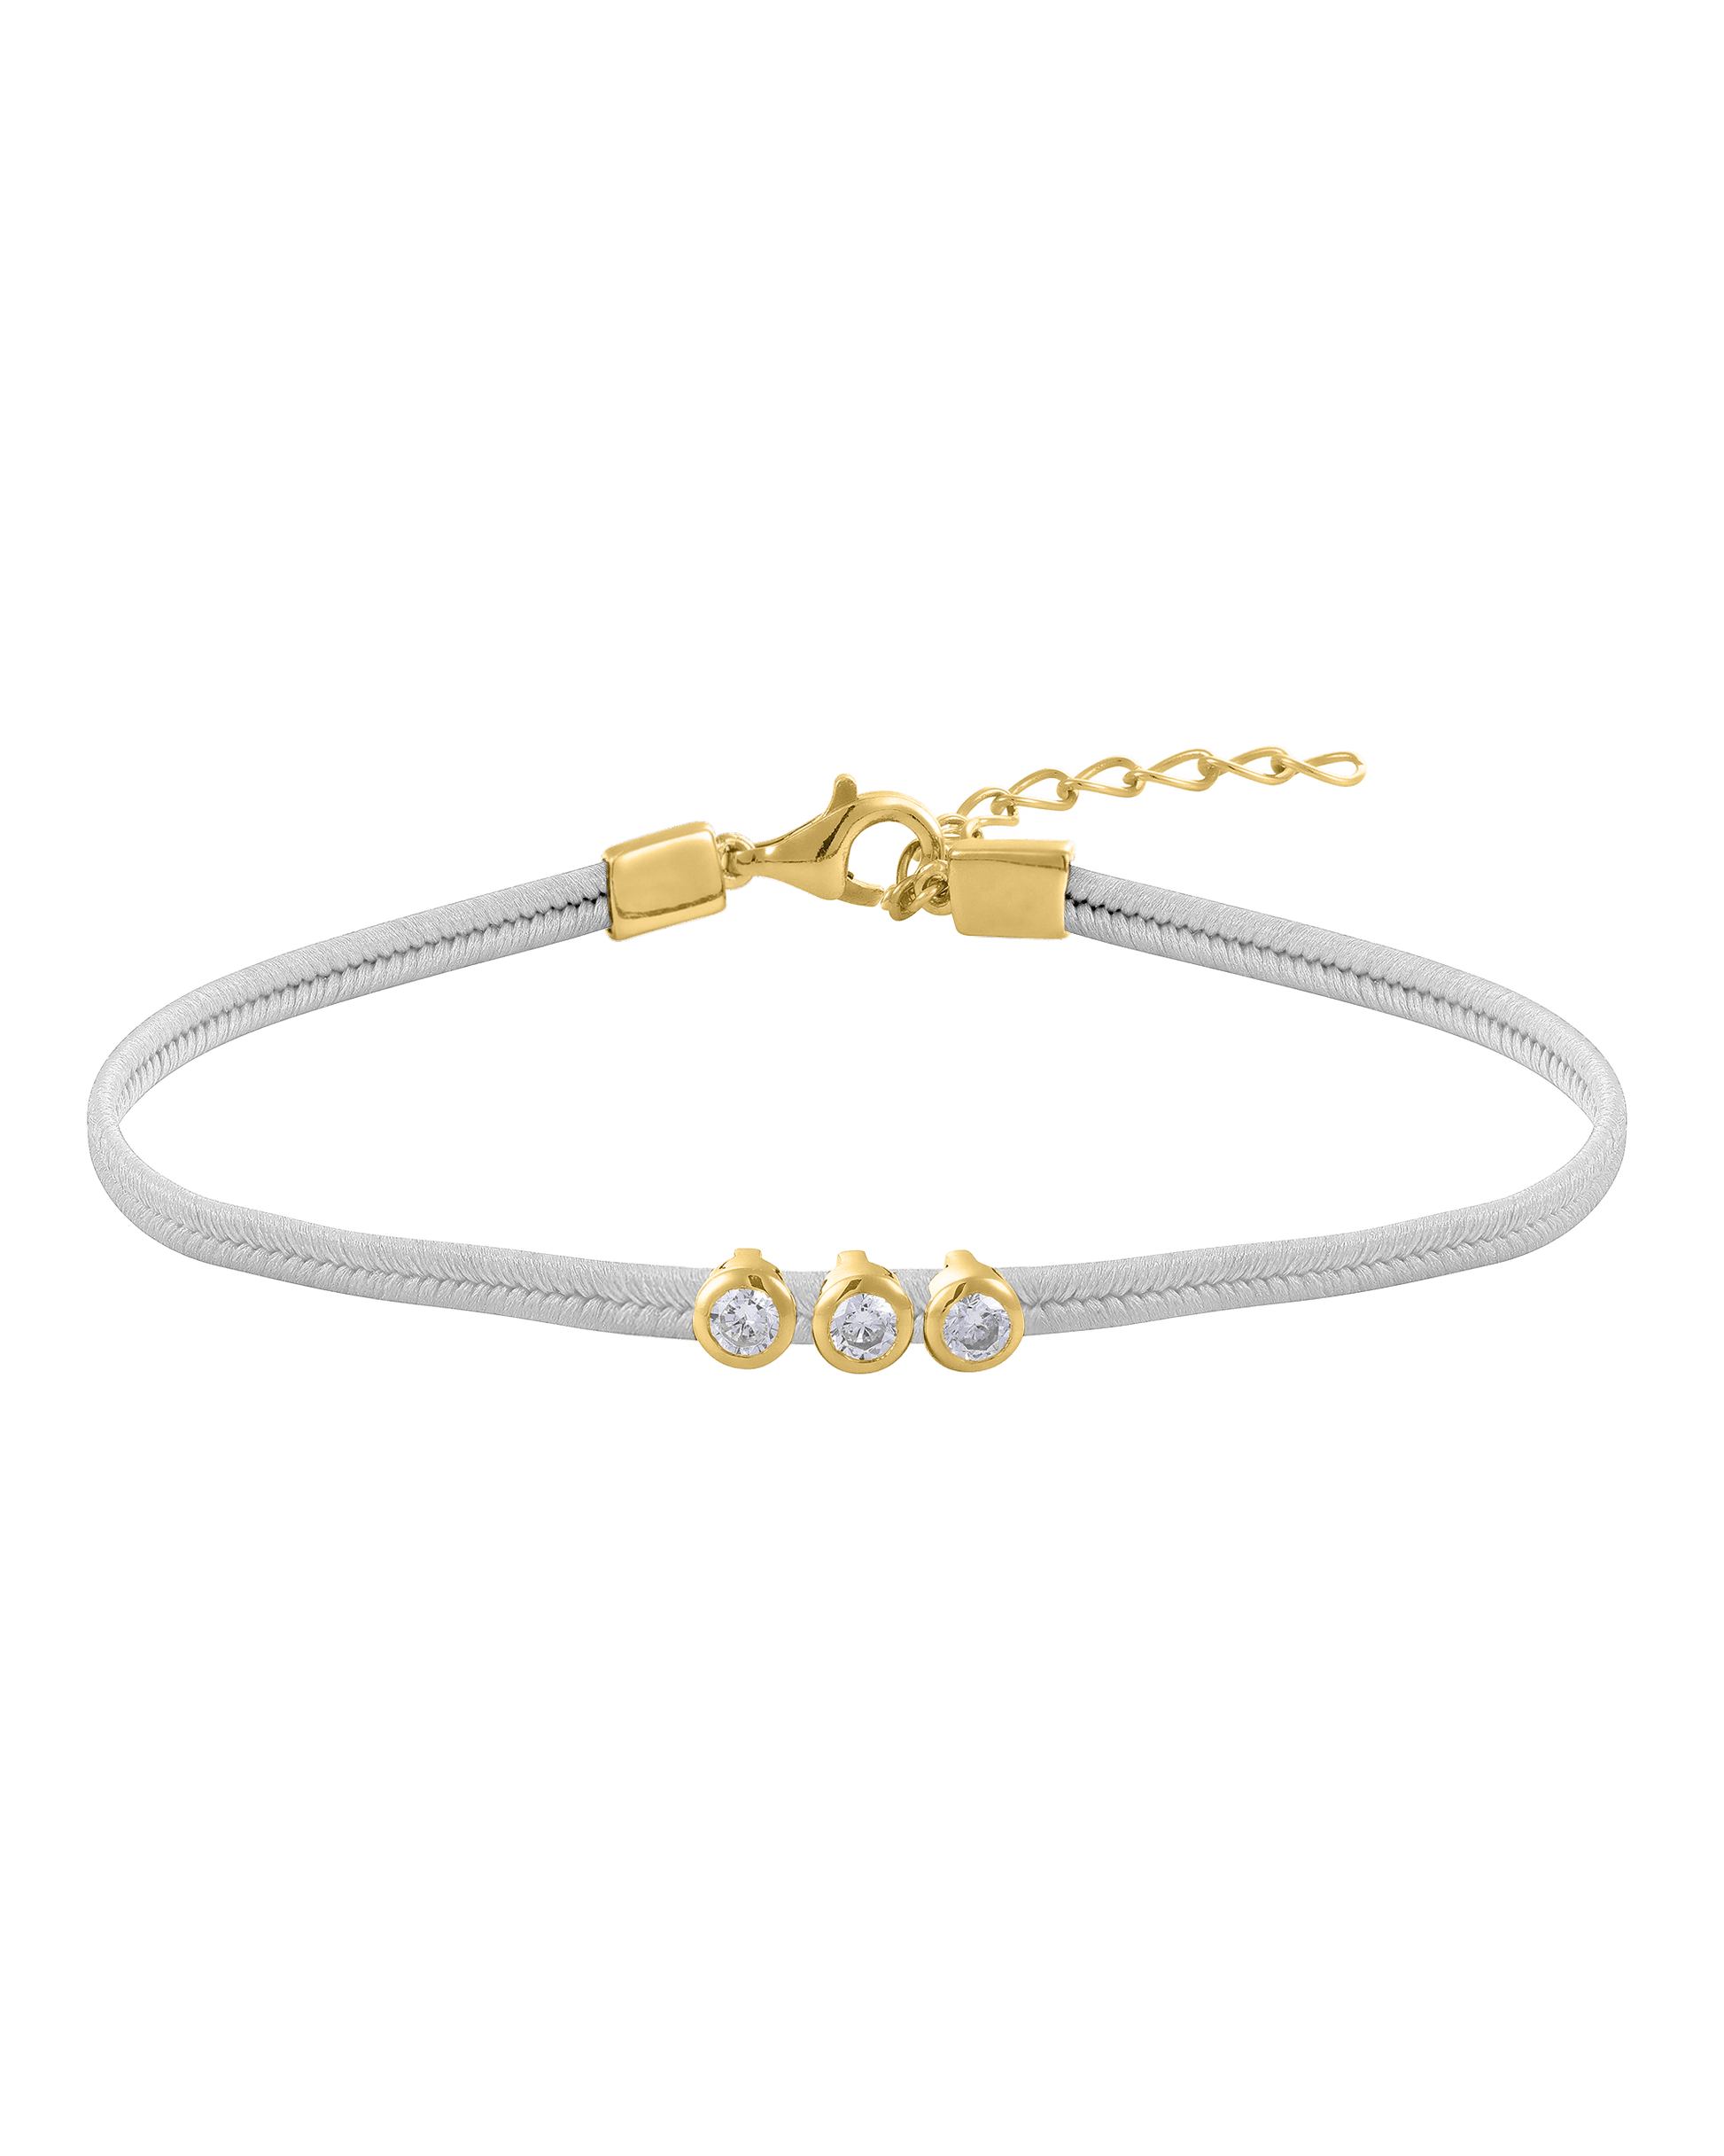 The Cord of Love - 18K Gold Vermeil Bracelets magal-dev 1 Diamond Cream 